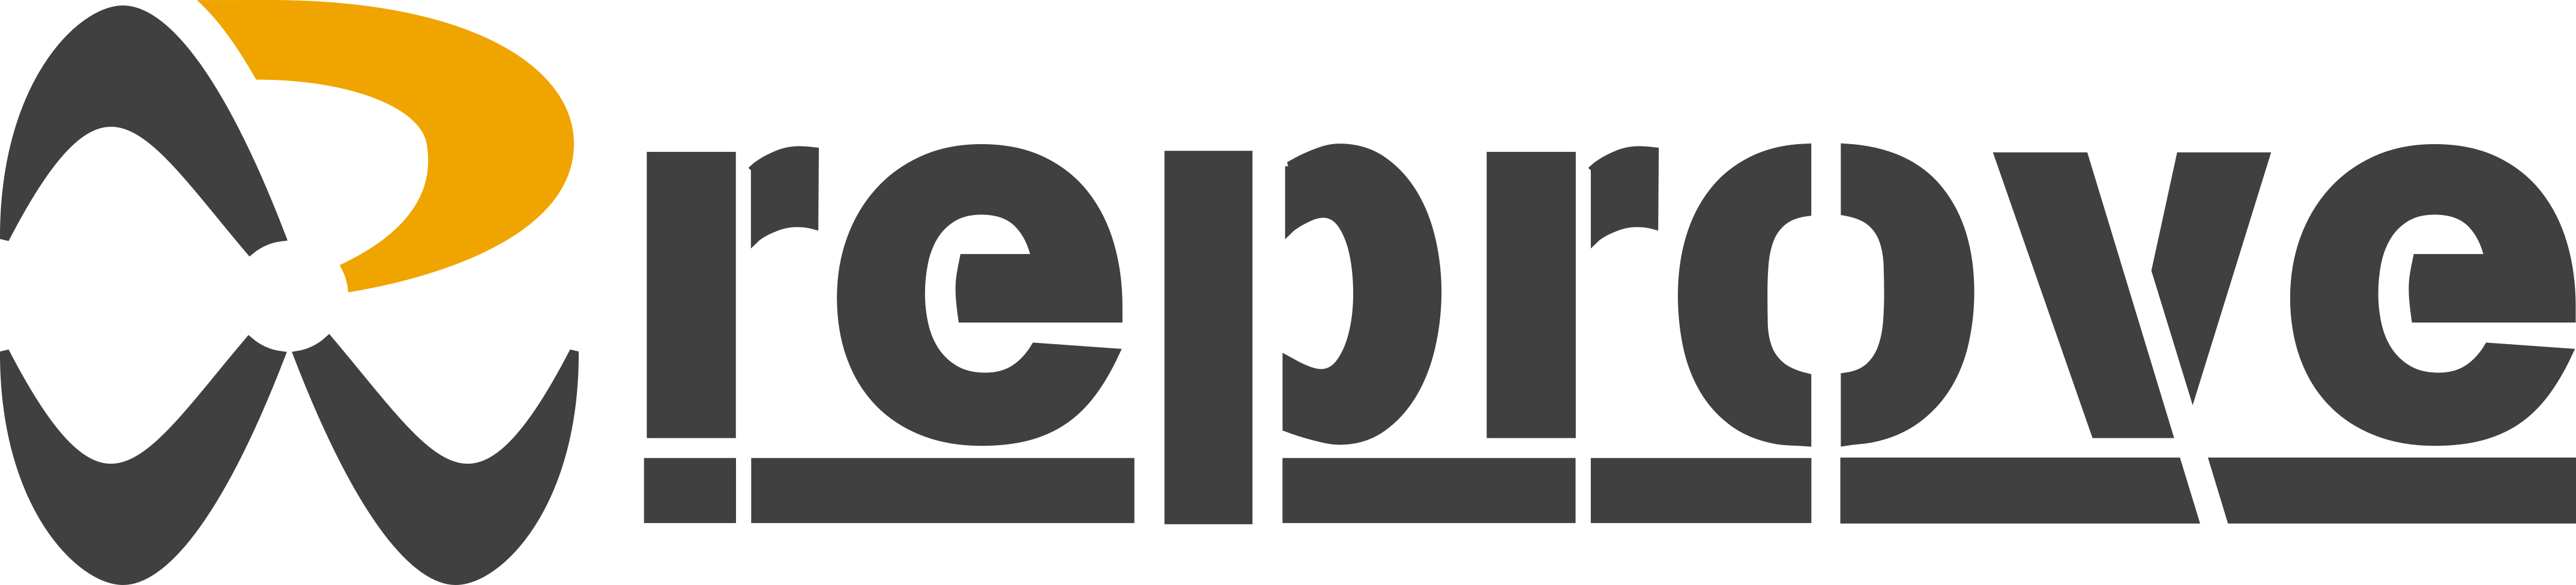 Reprove logo